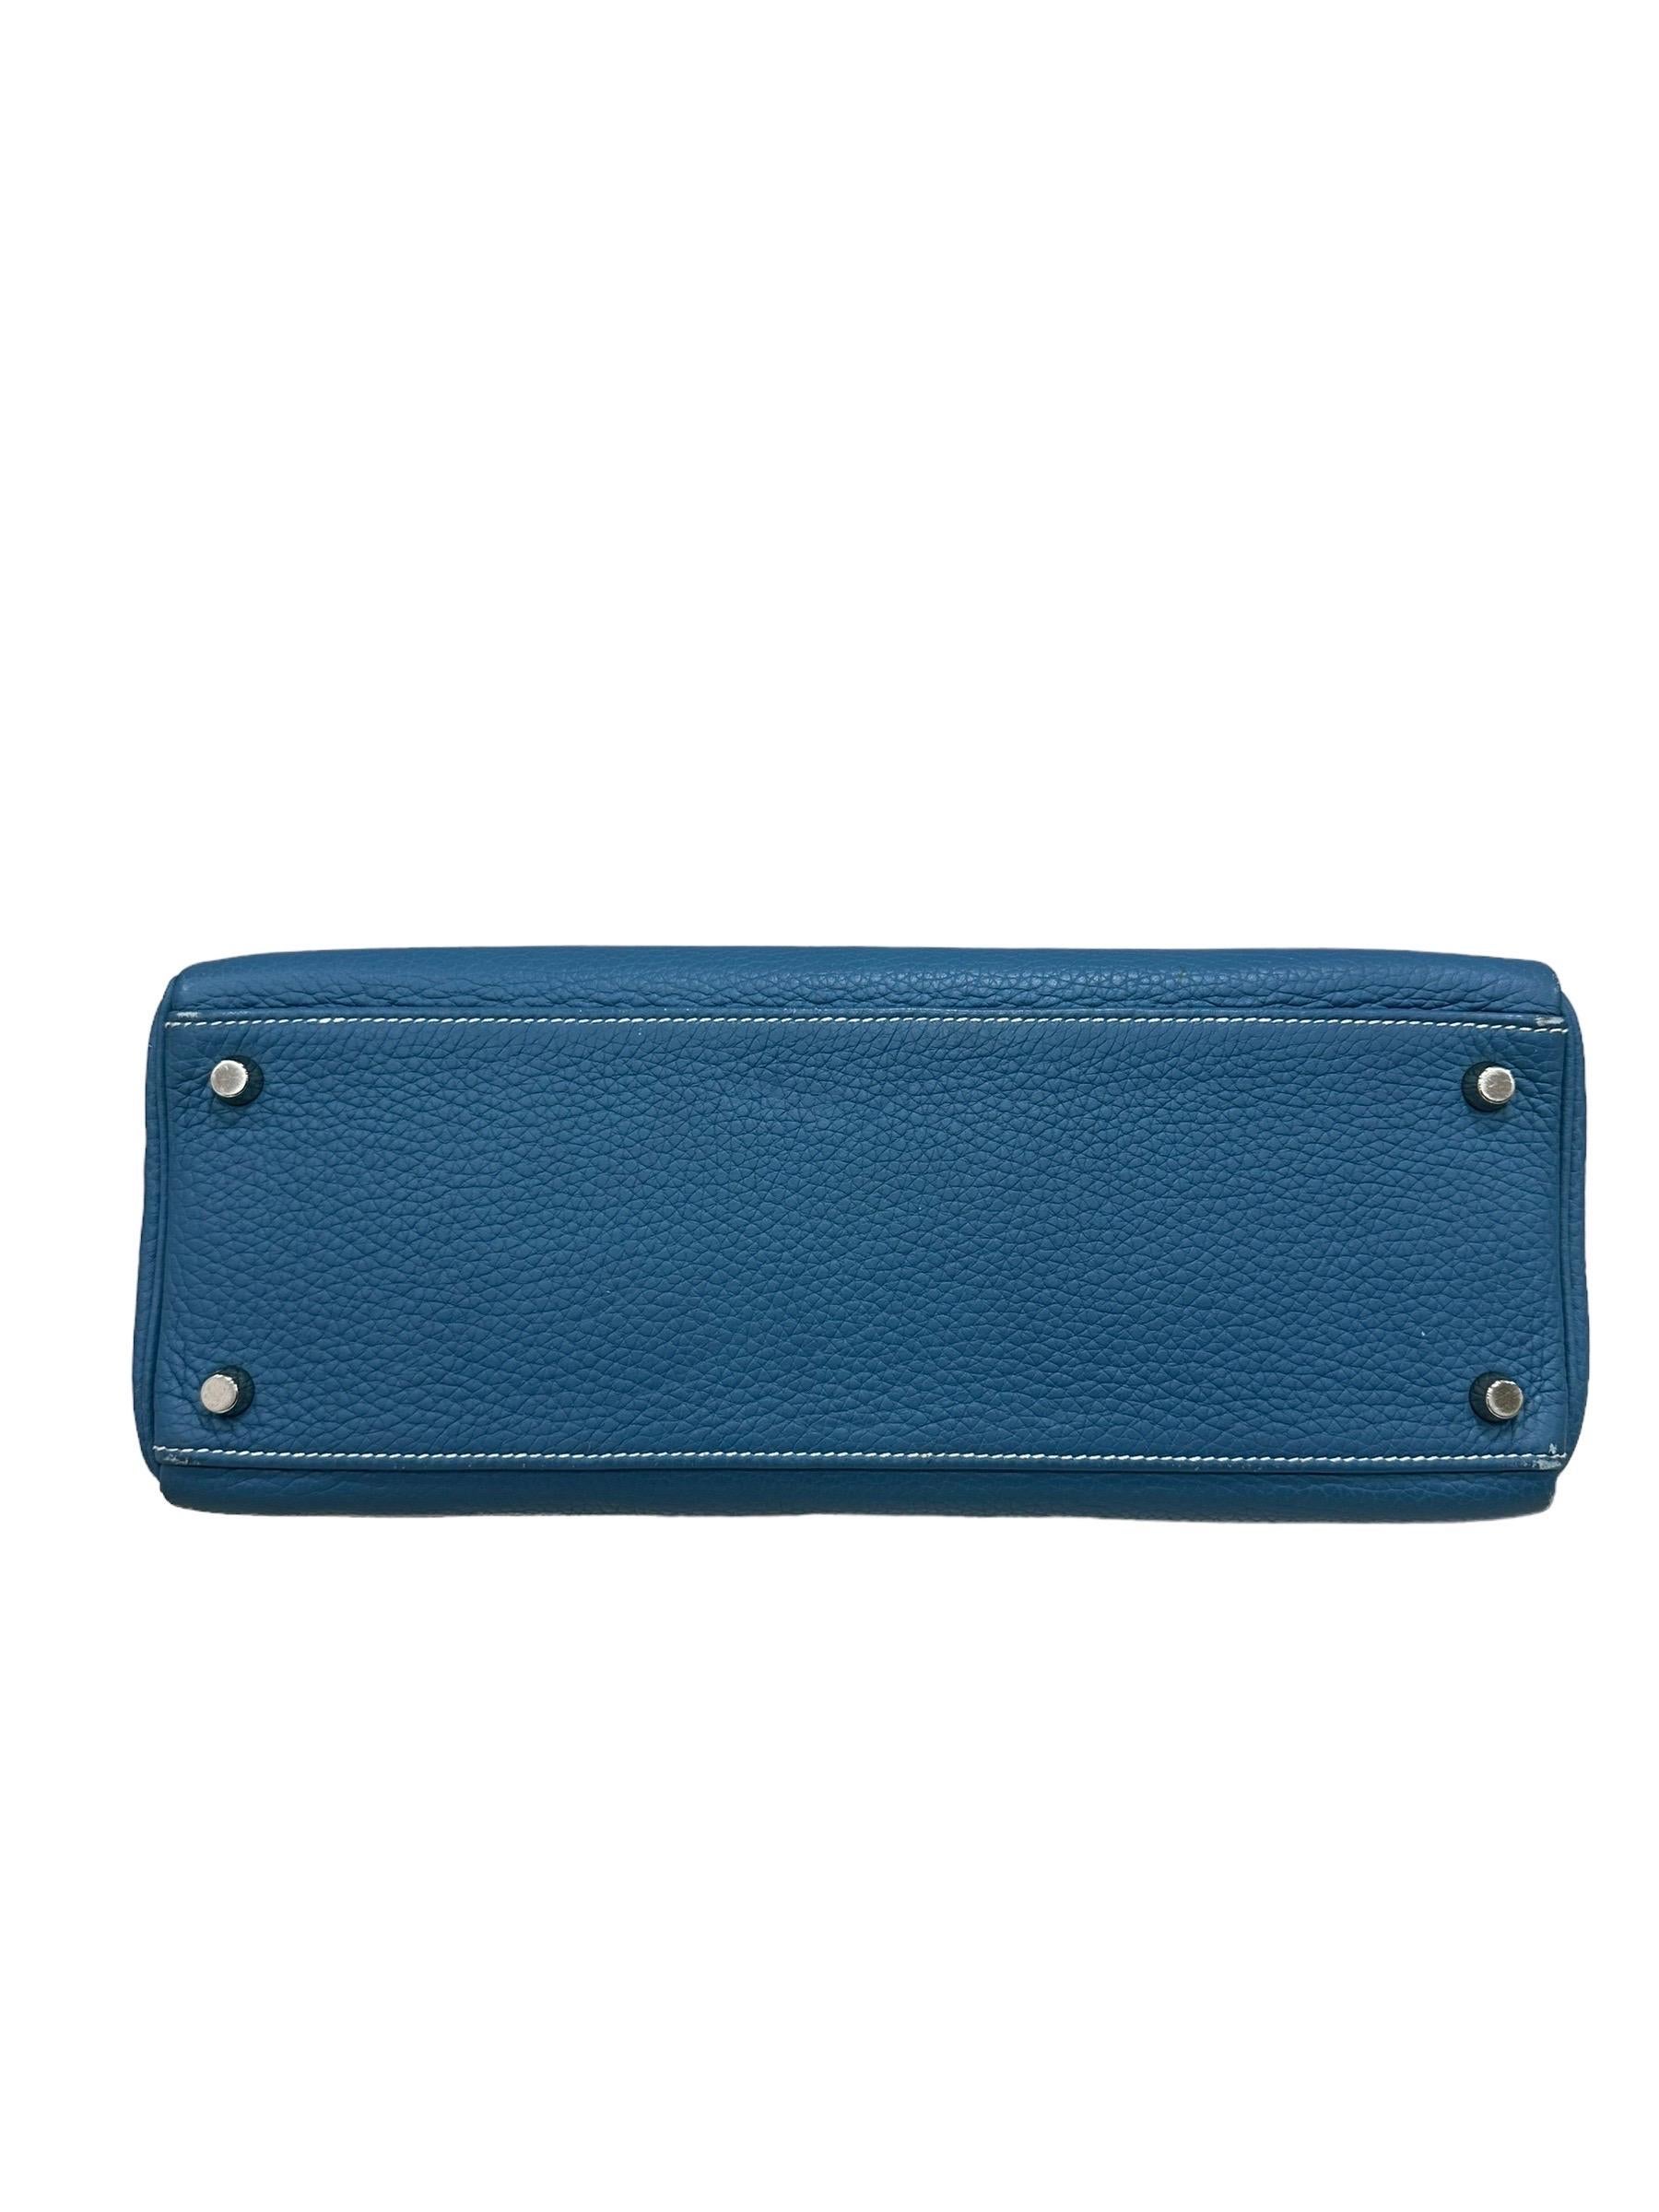 Hermès Kelly Bag 32 Clemence Leather Blue Izmir Top Handle Bag For Sale 4